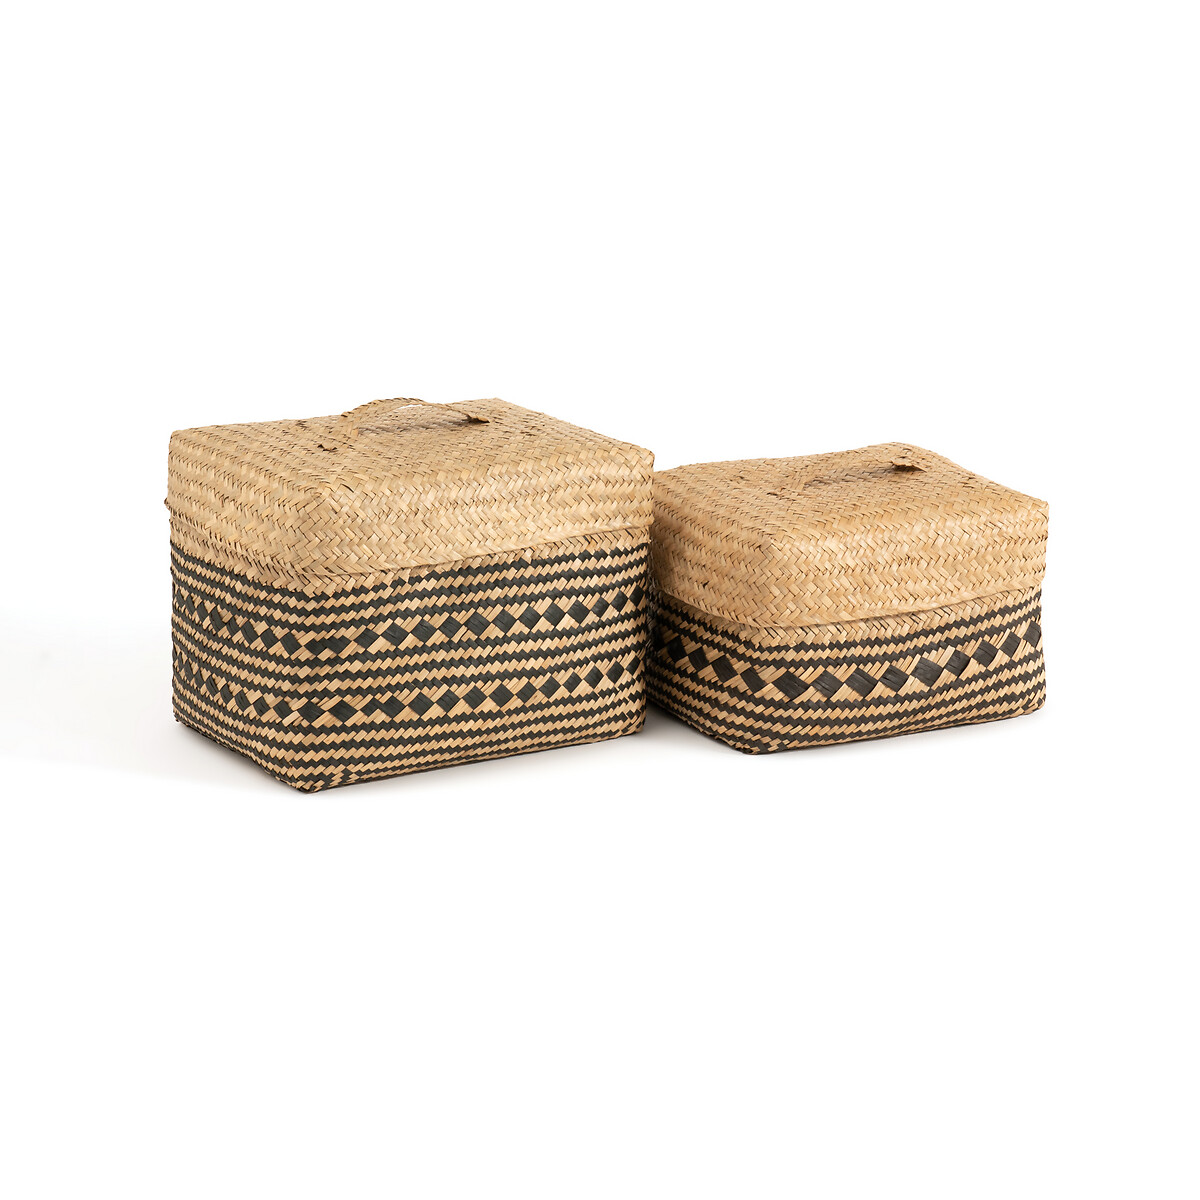 Kotak Storage Baskets (Set of 2)